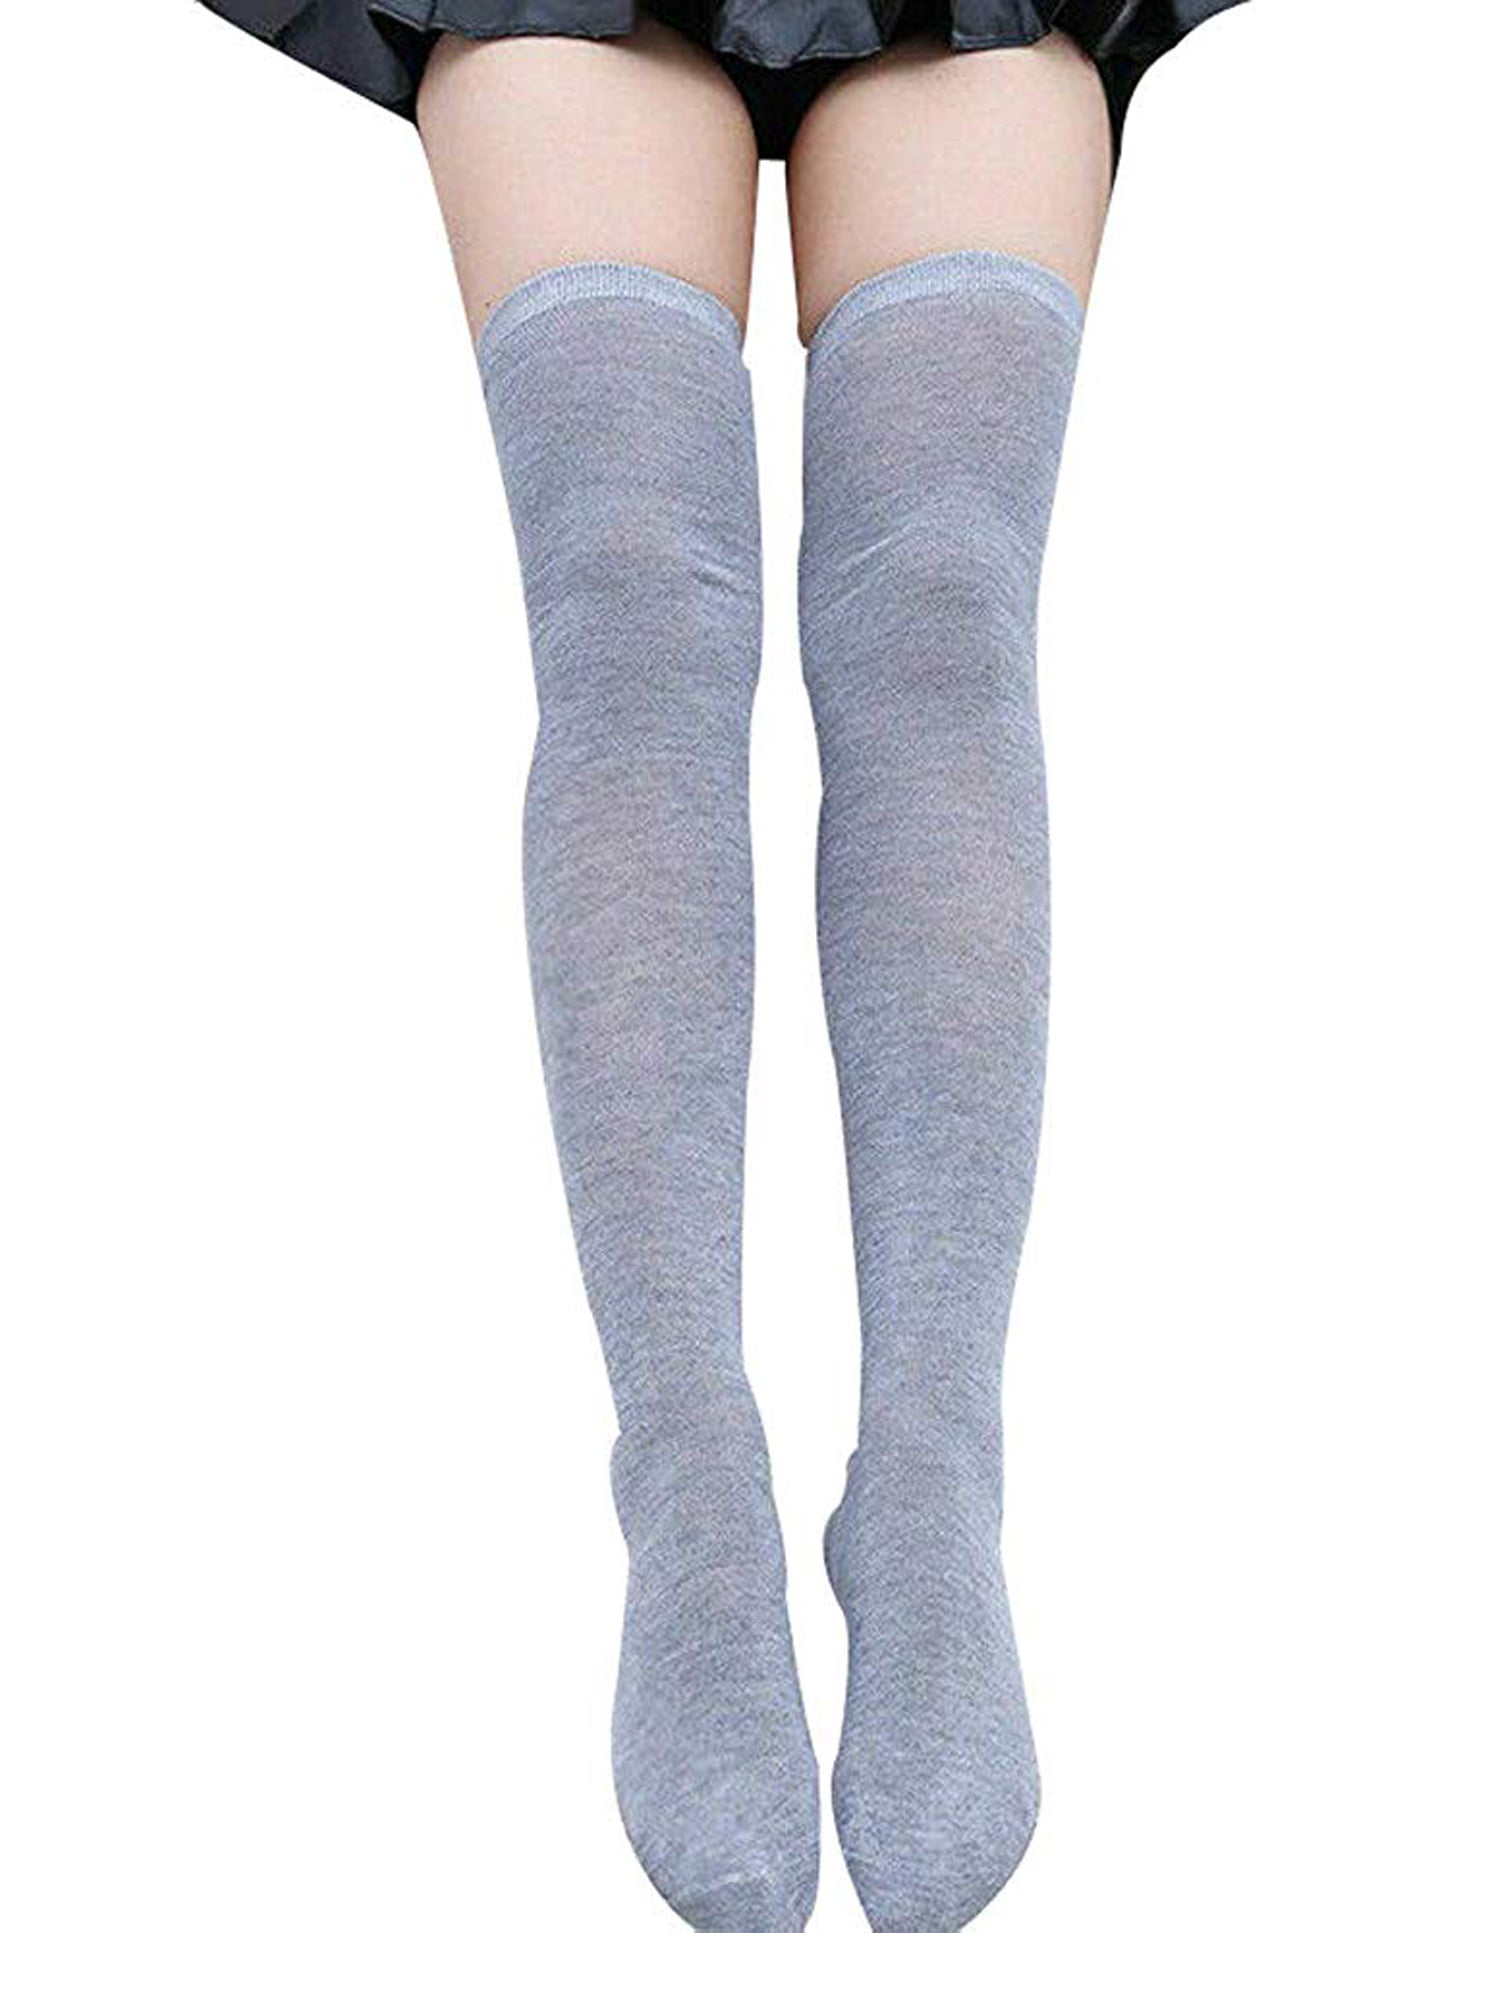 High Elasticity Girl Cotton Knee High Socks Uniform Peach Flowers Women Tube Socks 